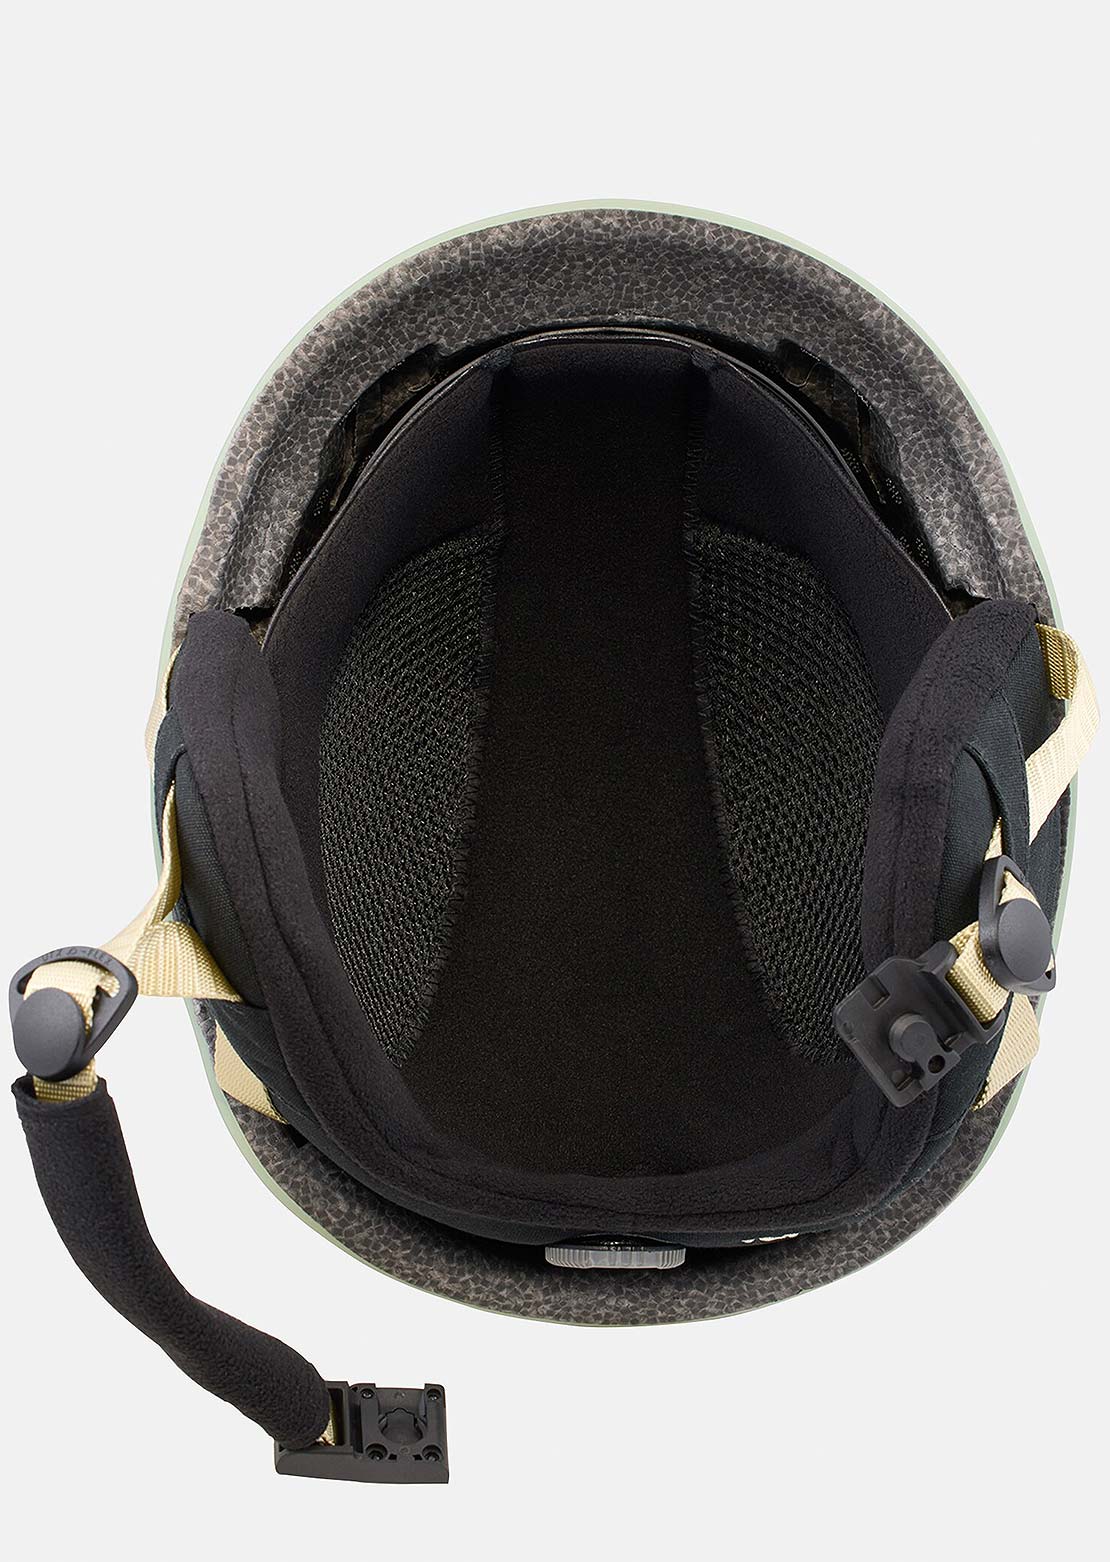 Anon Junior Burner Helmet Hedge